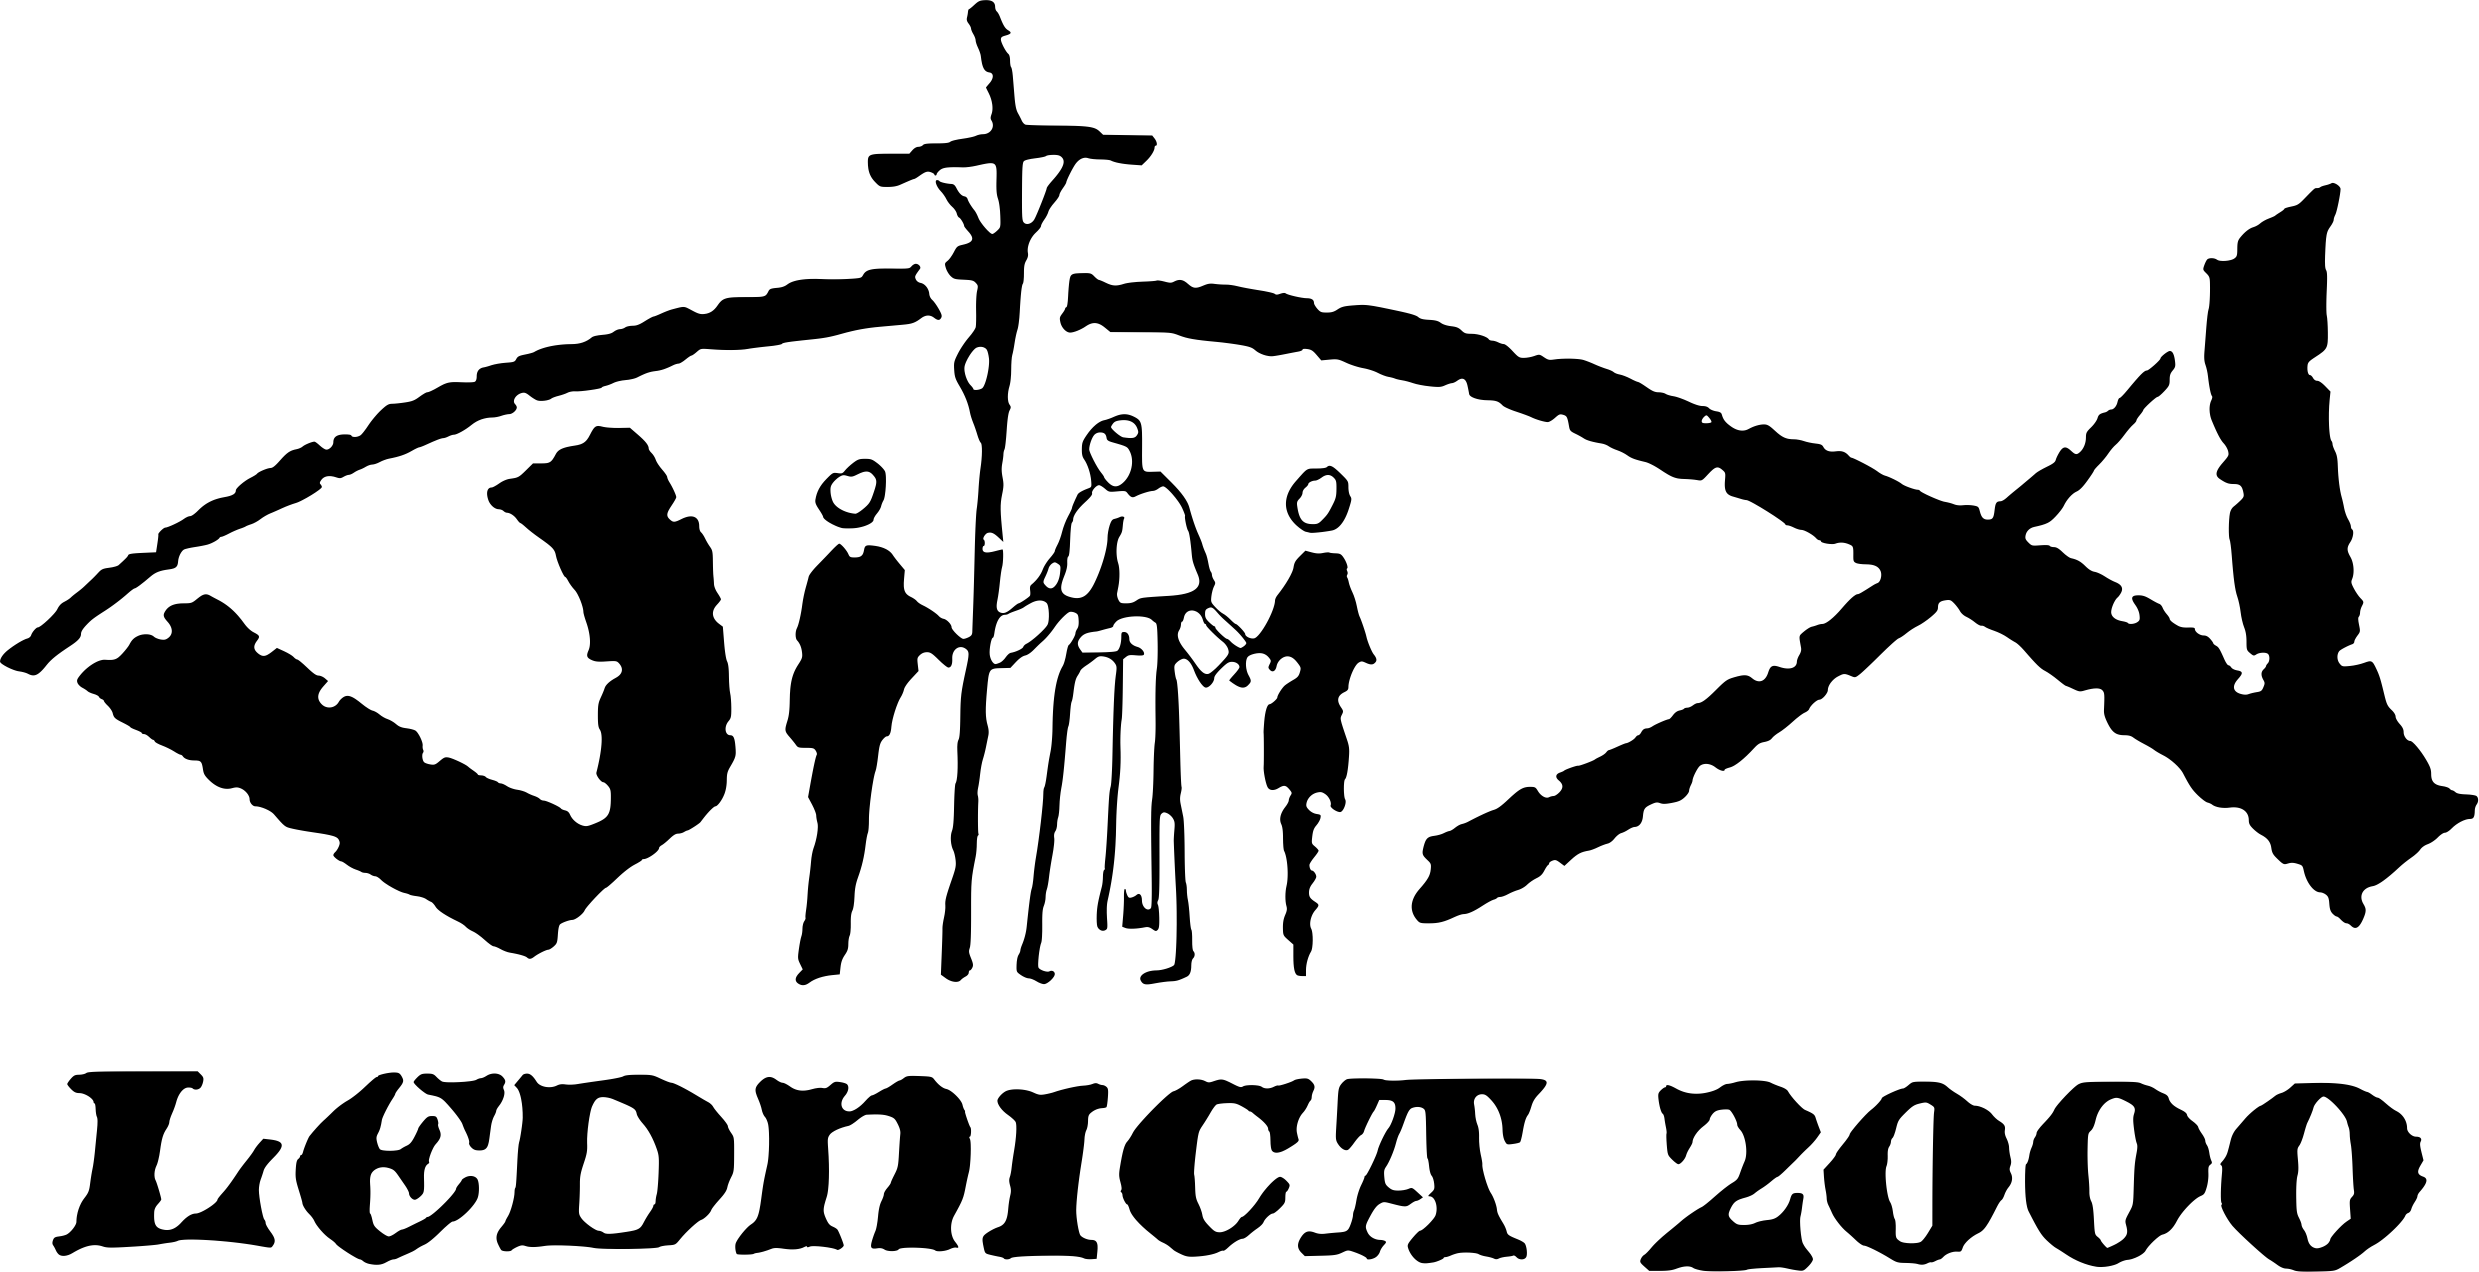 lednica2000-logo-czarne